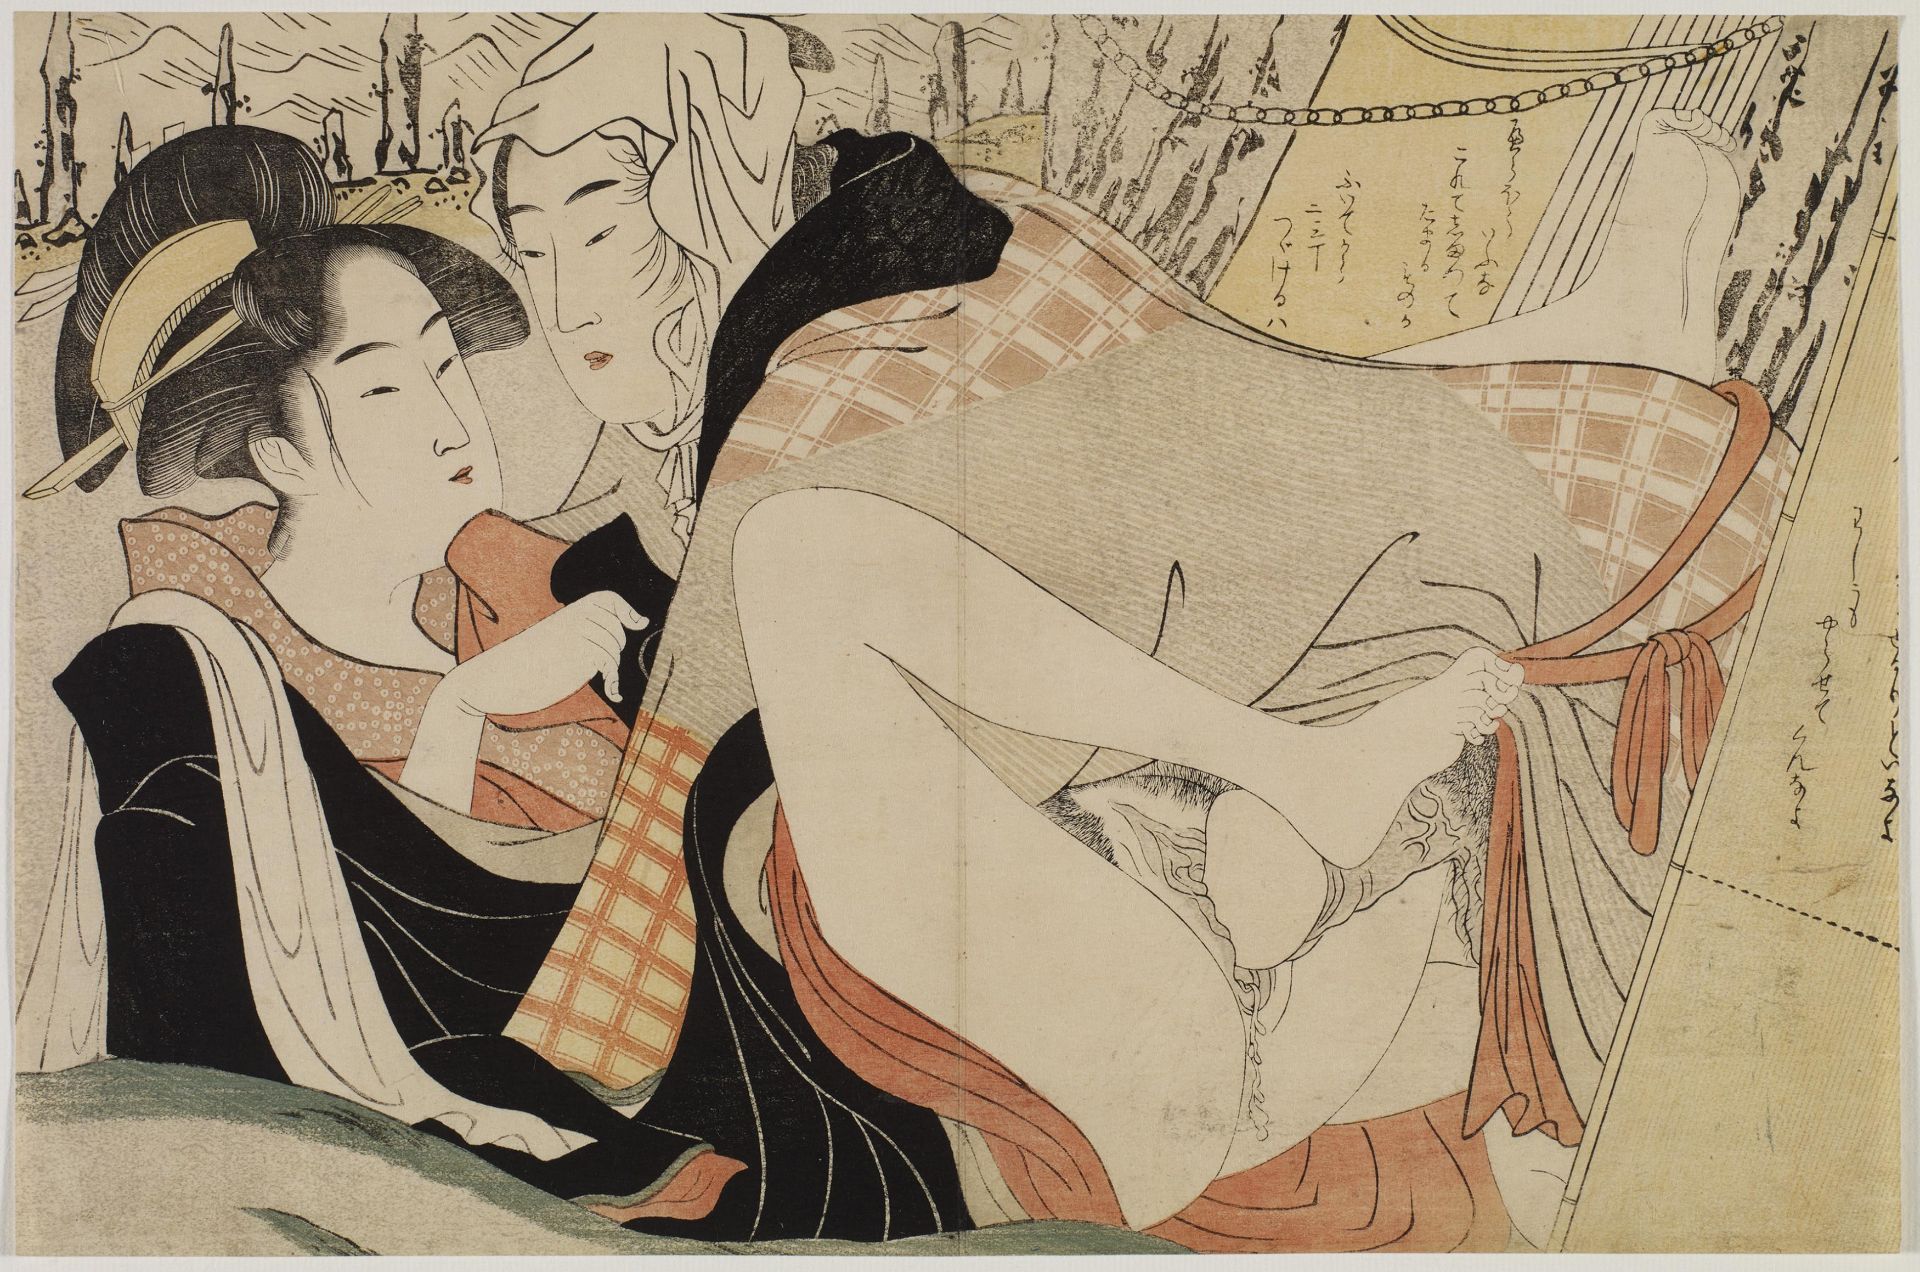 13 Blätter der Shunga-Serie "Fumi no kiyogaki" - Image 16 of 27